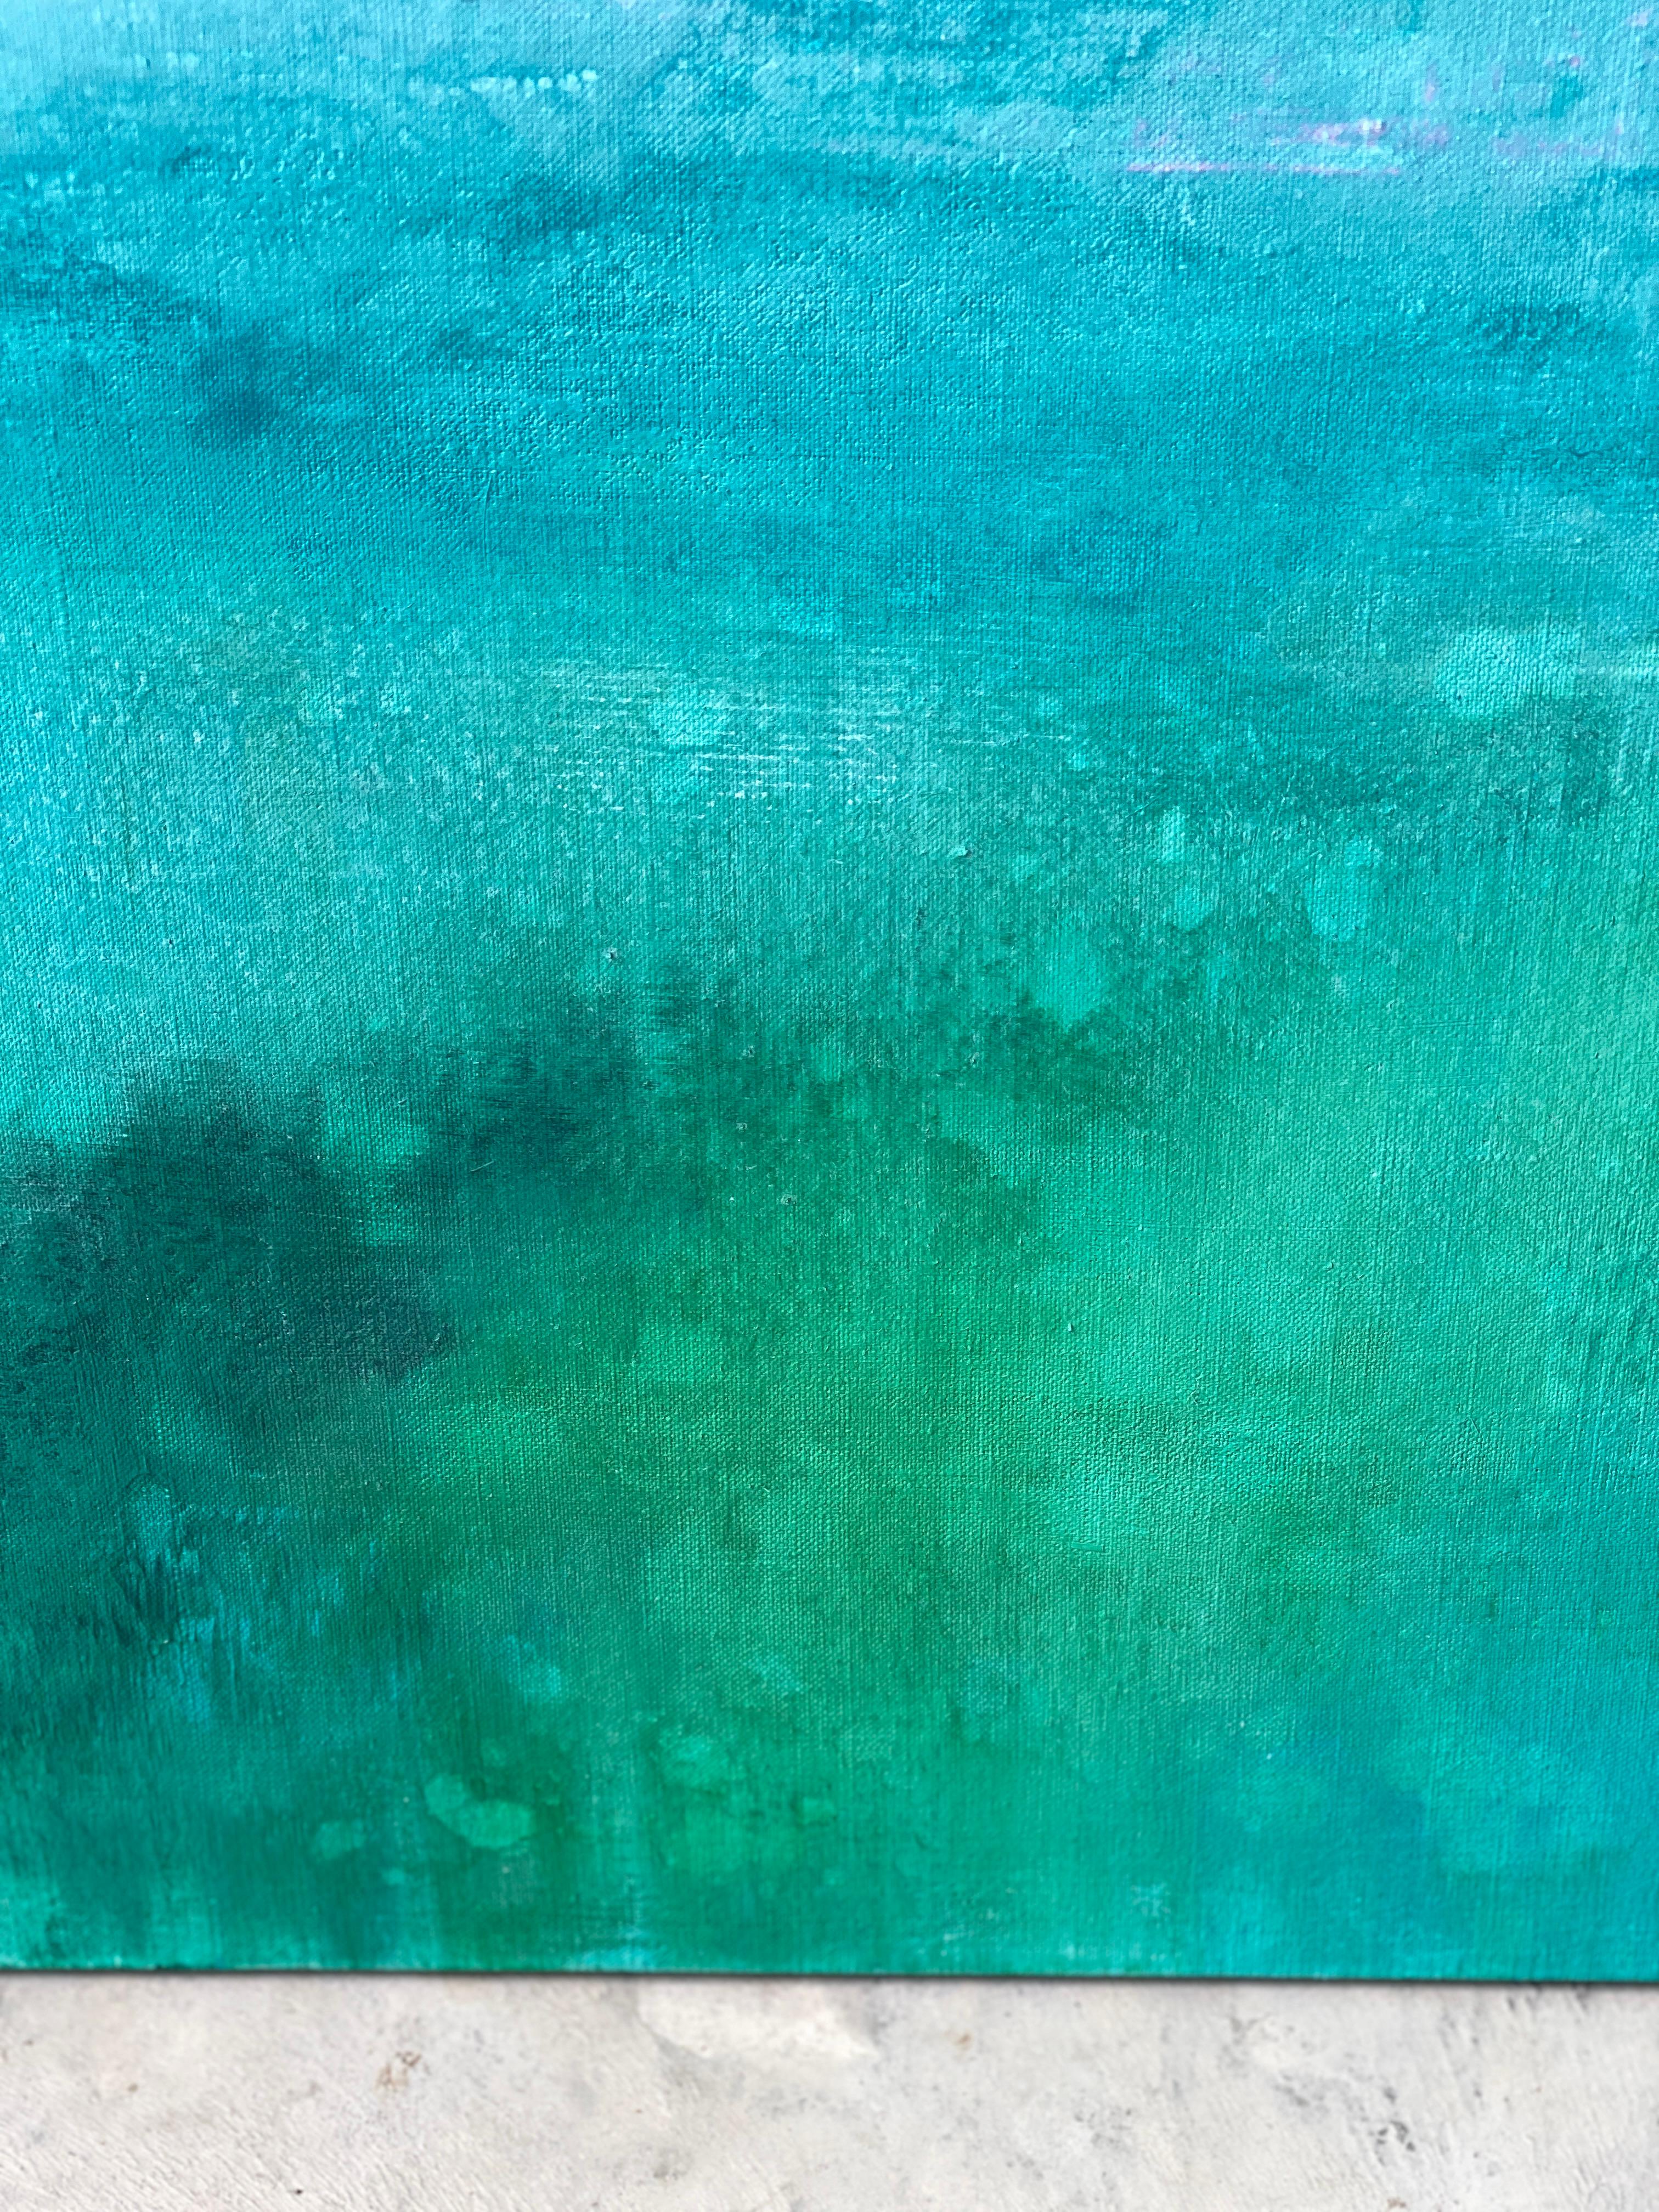 The Secret Garden green abstract landscape blue aqua impressionism sky linen For Sale 4